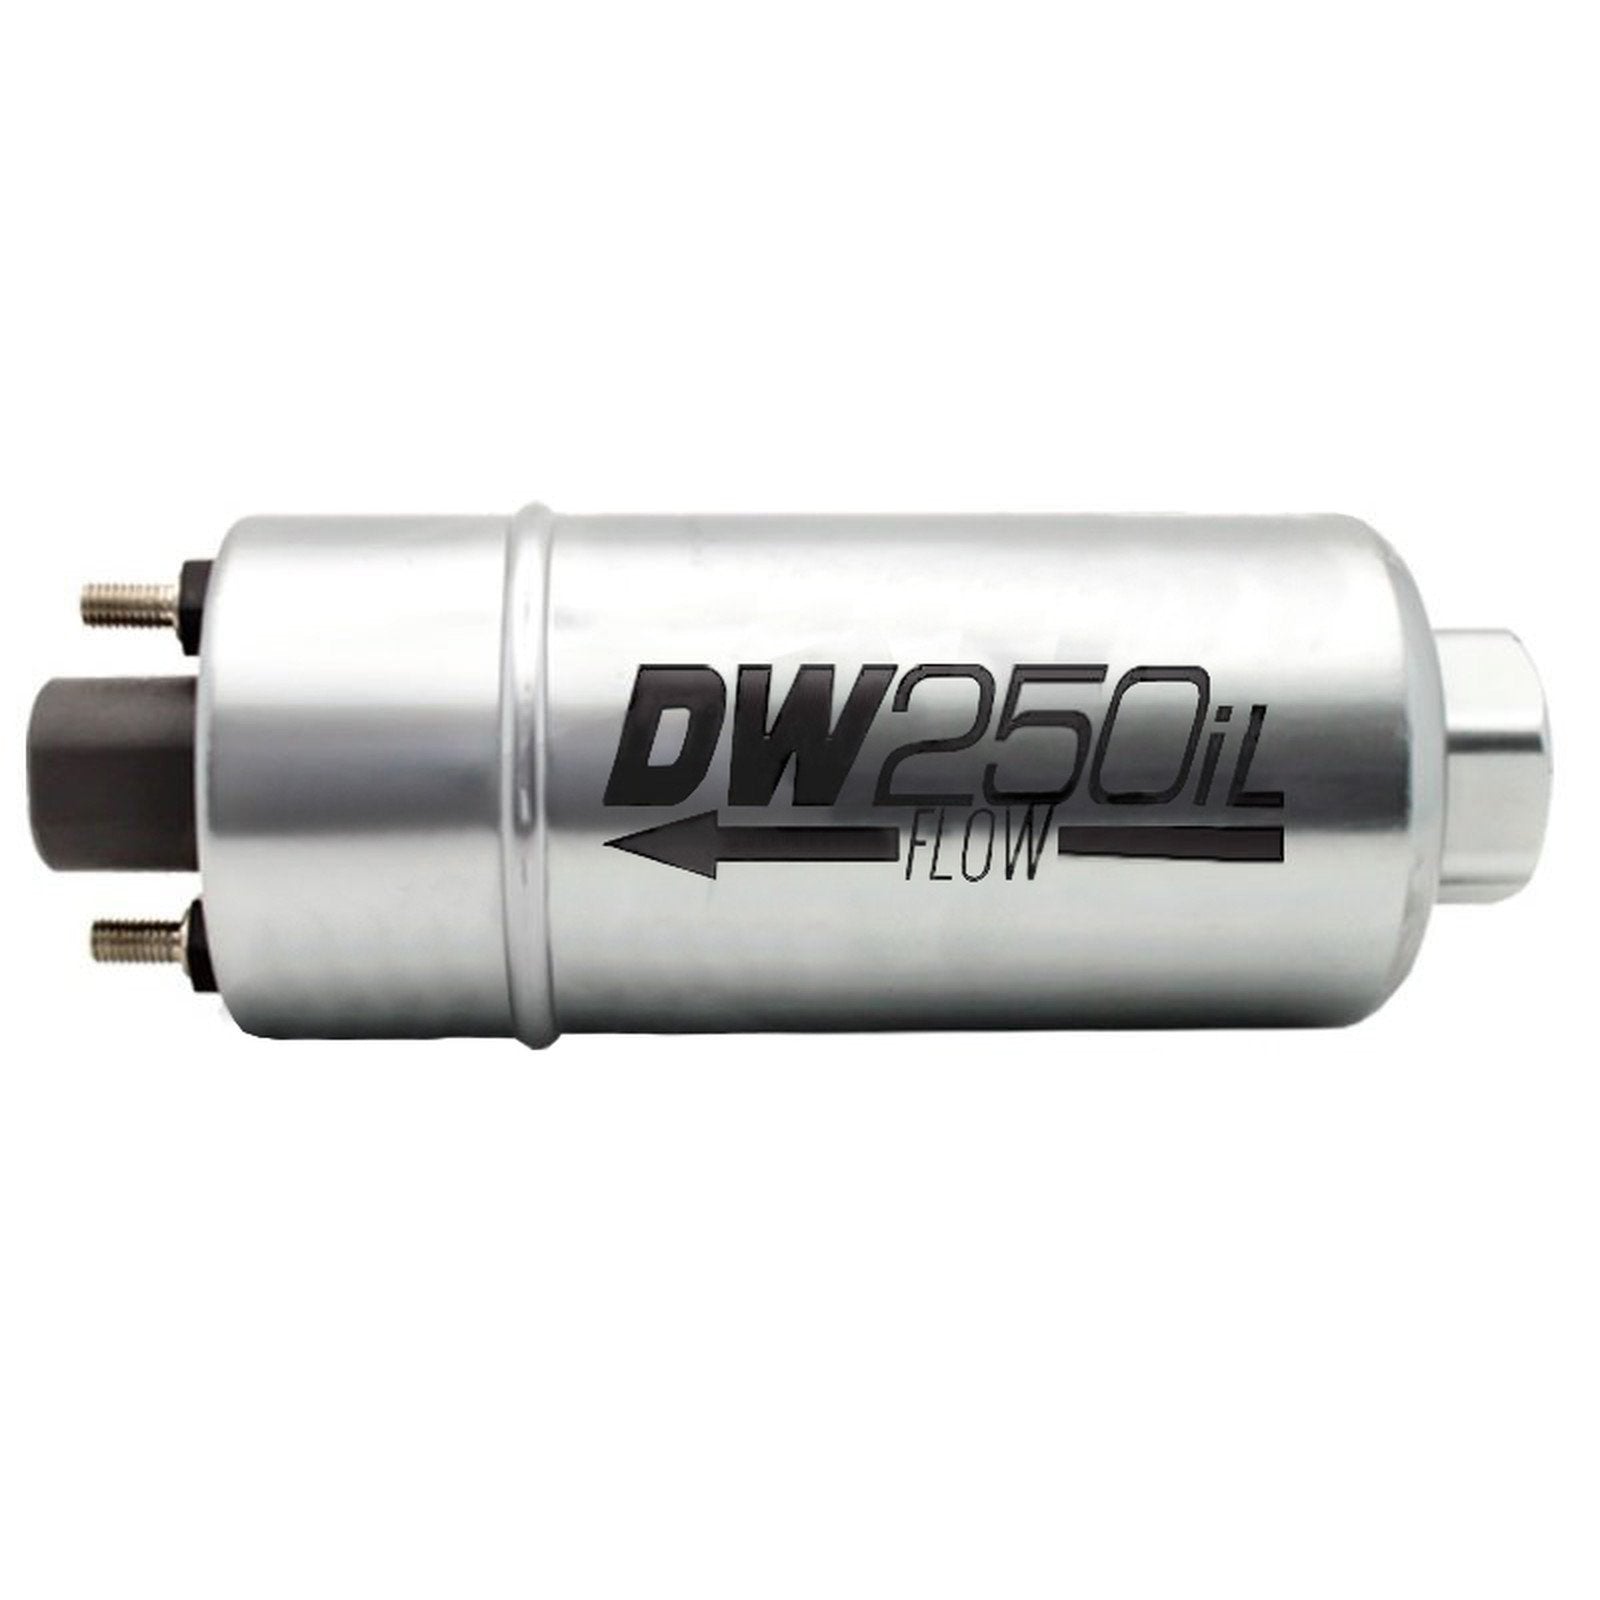 DEATSCHWERKS external fuel pump DW250iL universal 250 liters/hour - PARTS33 GmbH